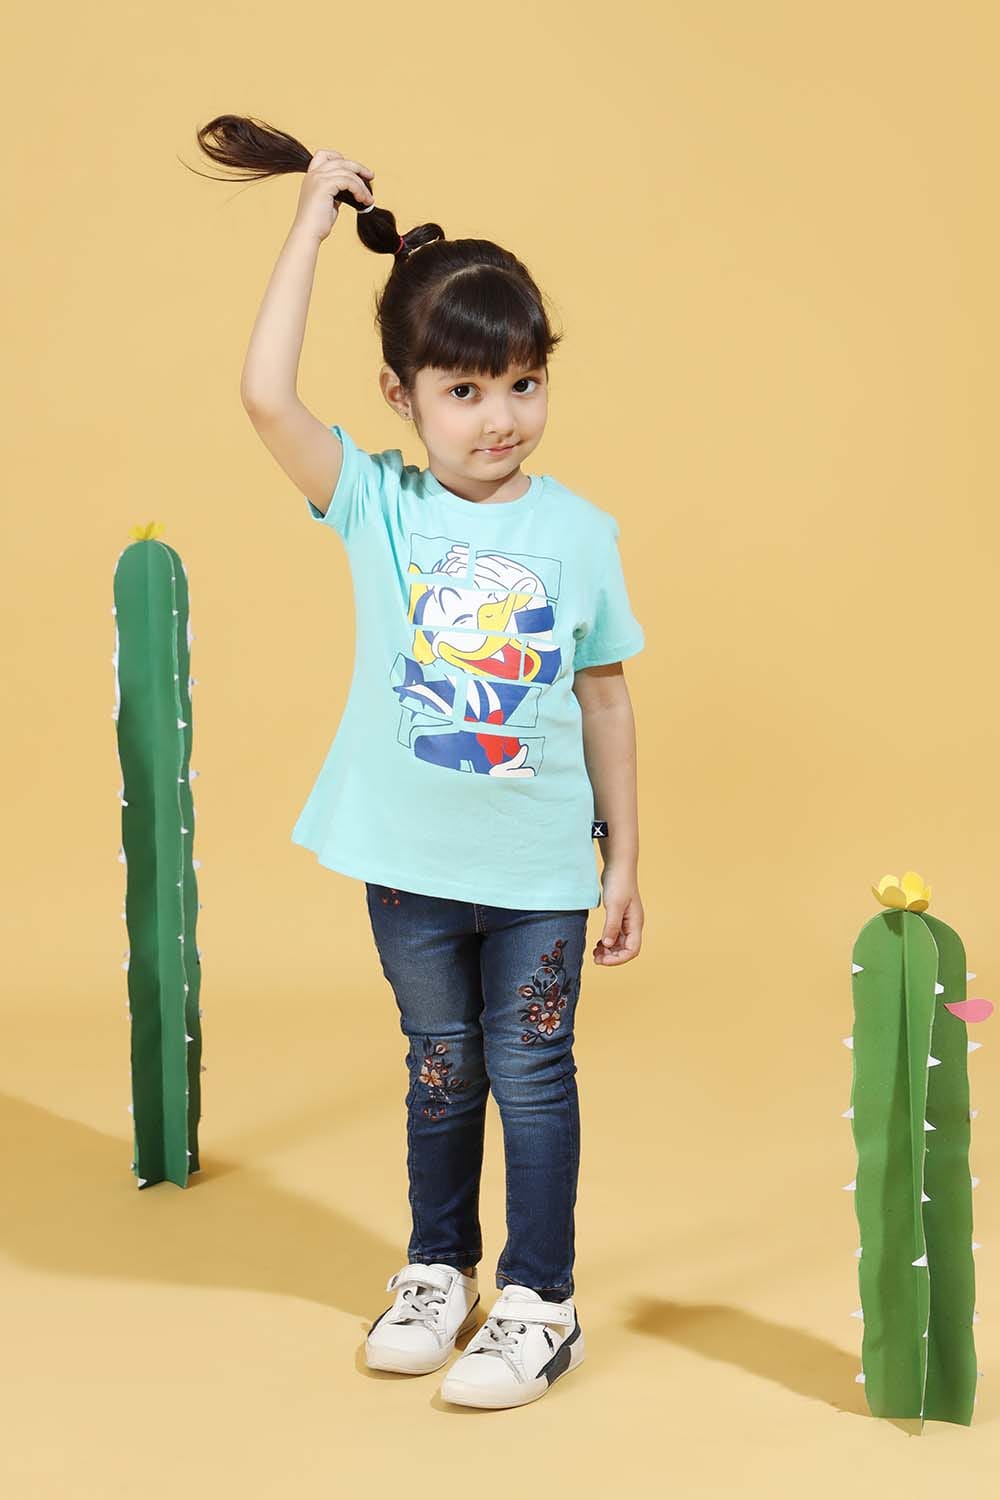 Hope Not Out by Shahid Afridi Girls Knit T-Shirt Girls Light Green Duck Graphi T-Shirt